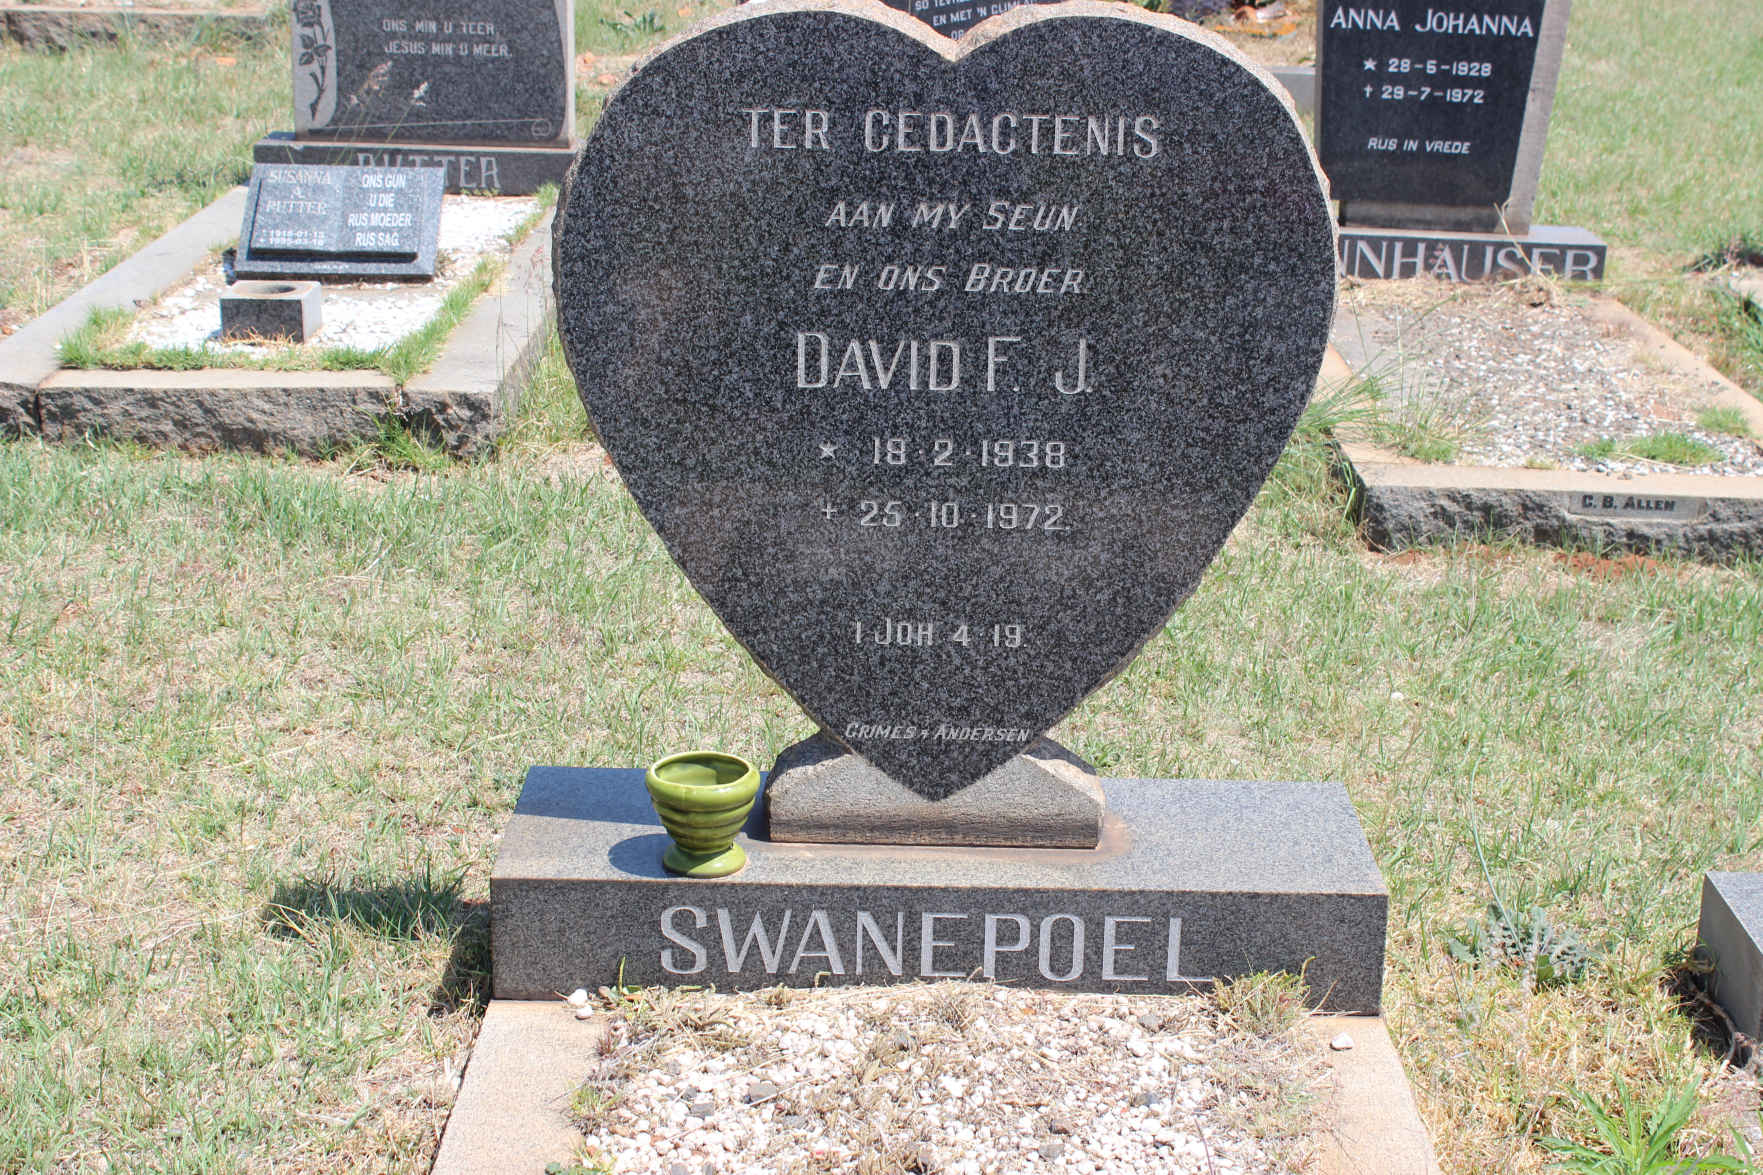 SWANEPOEL David F.J. 1938-1972